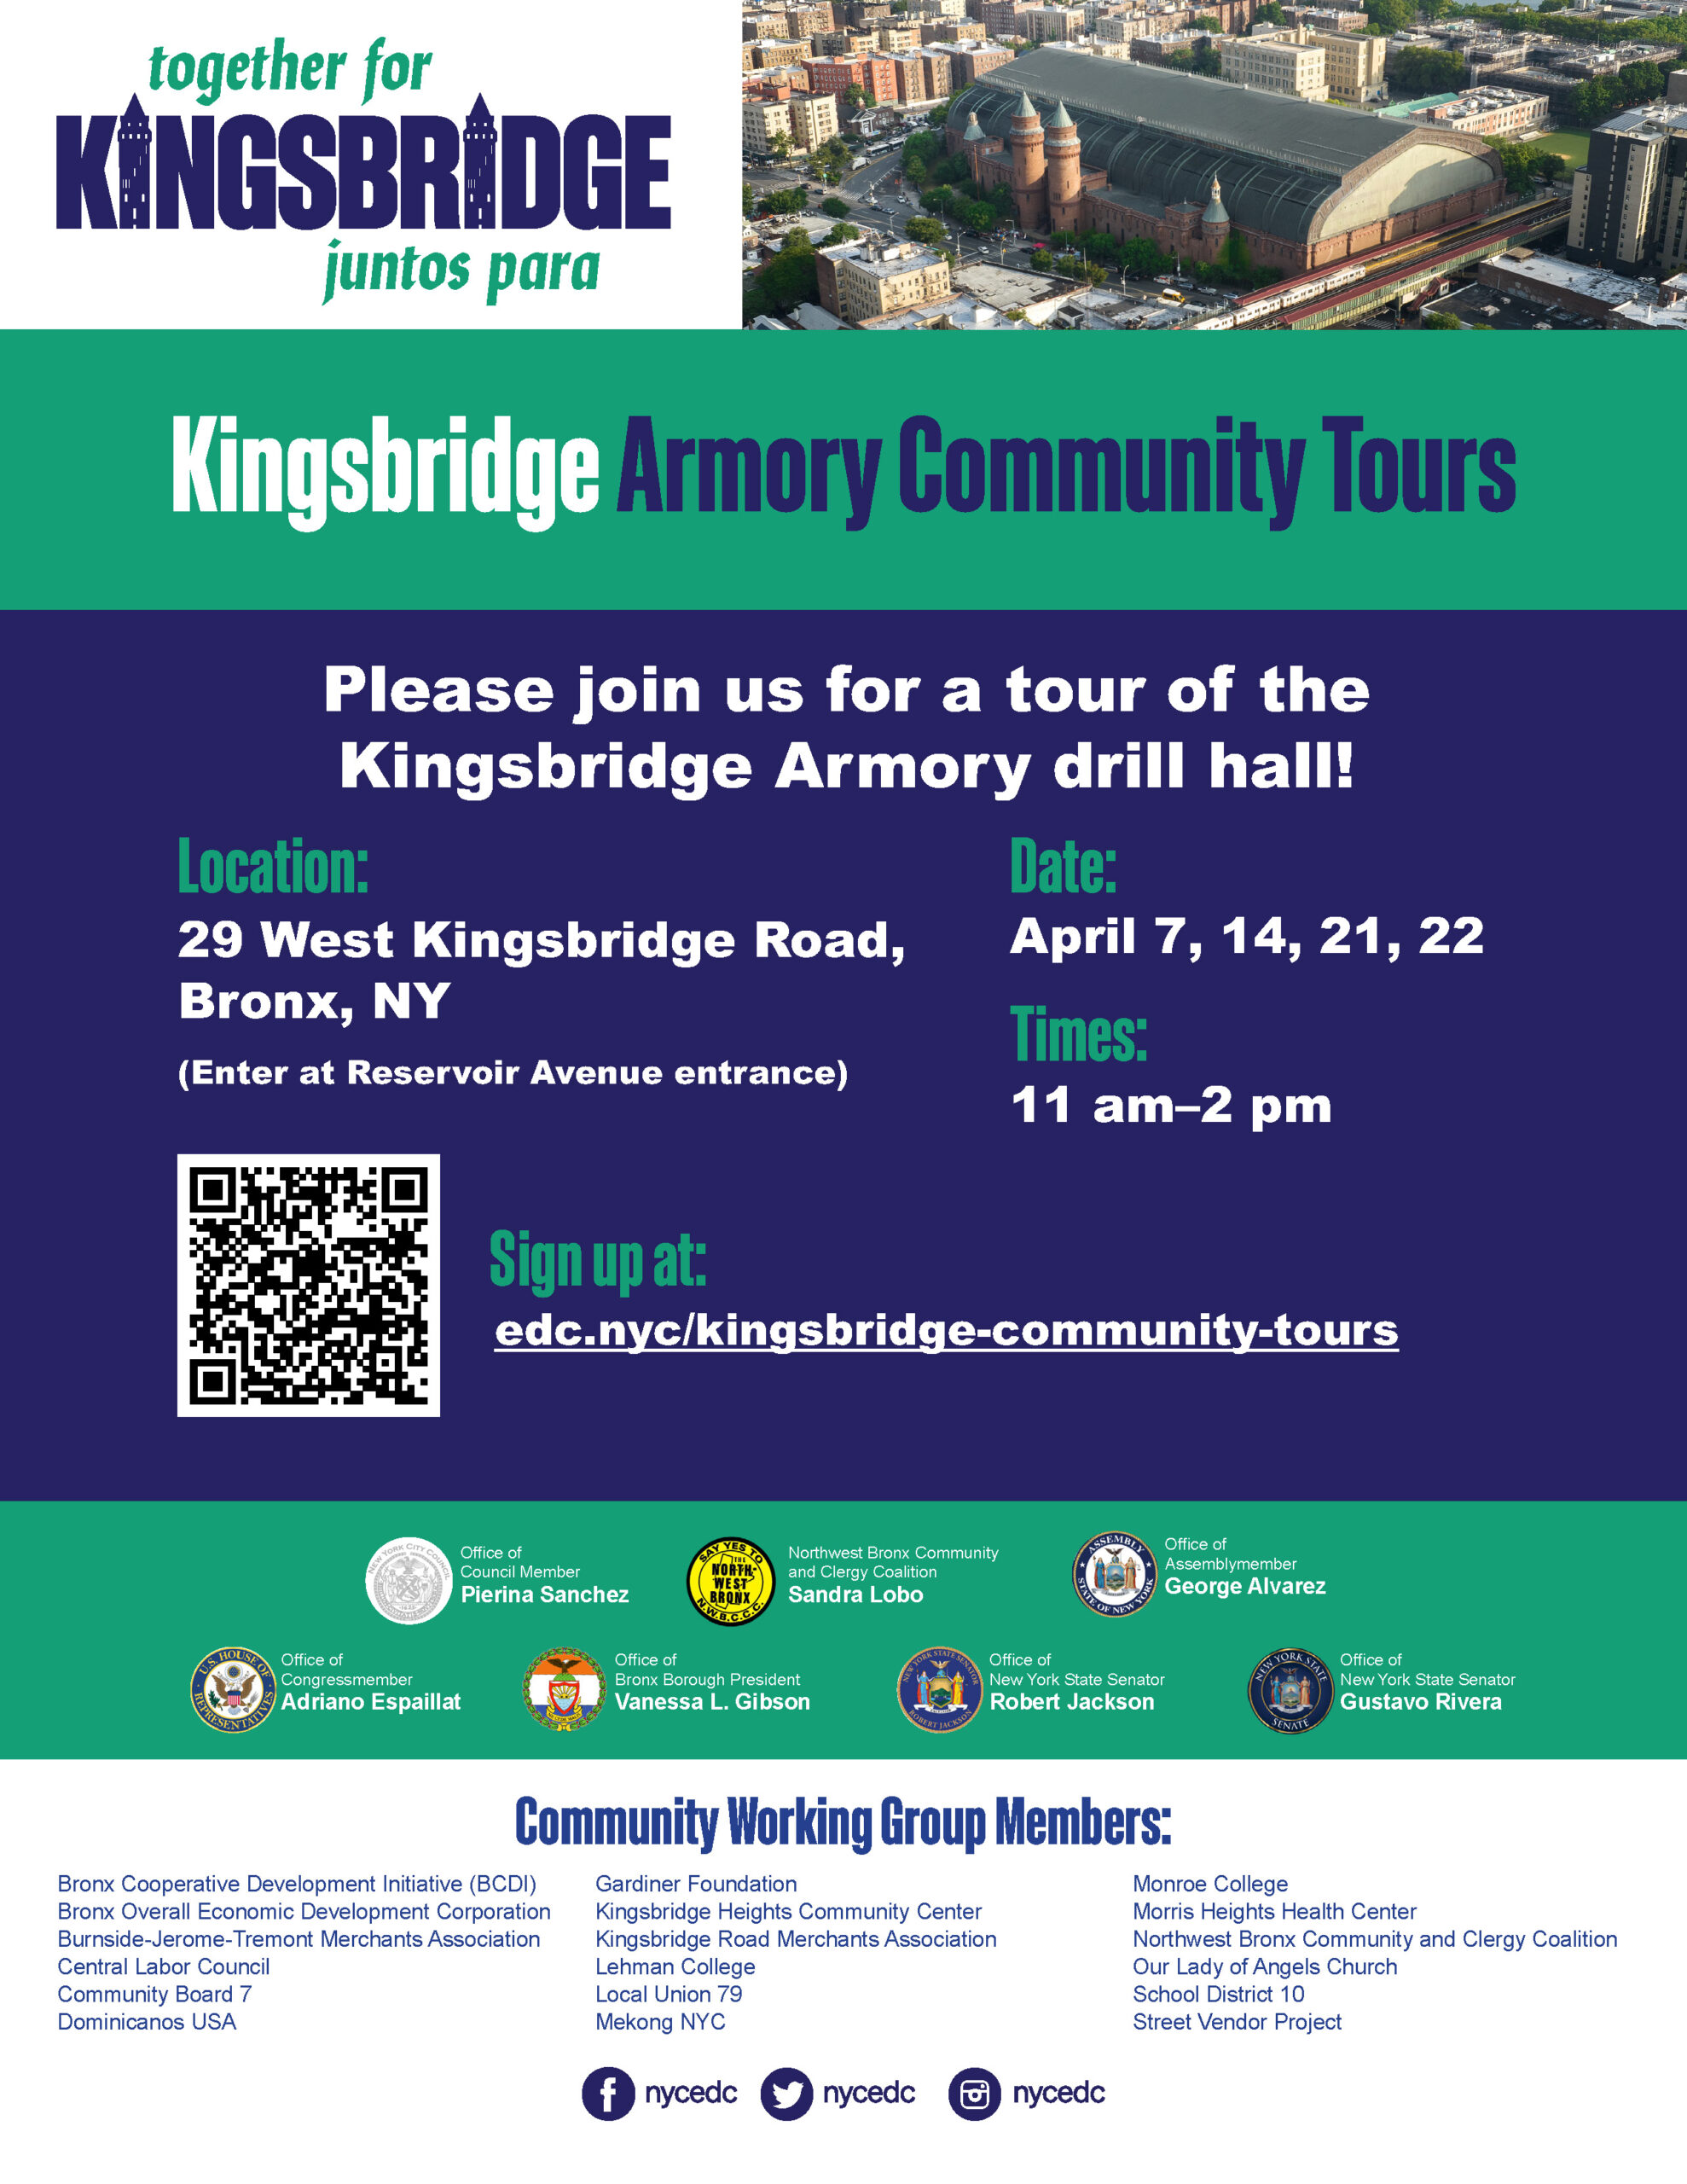 Flyer for Kingsbridge Armory Community Tours